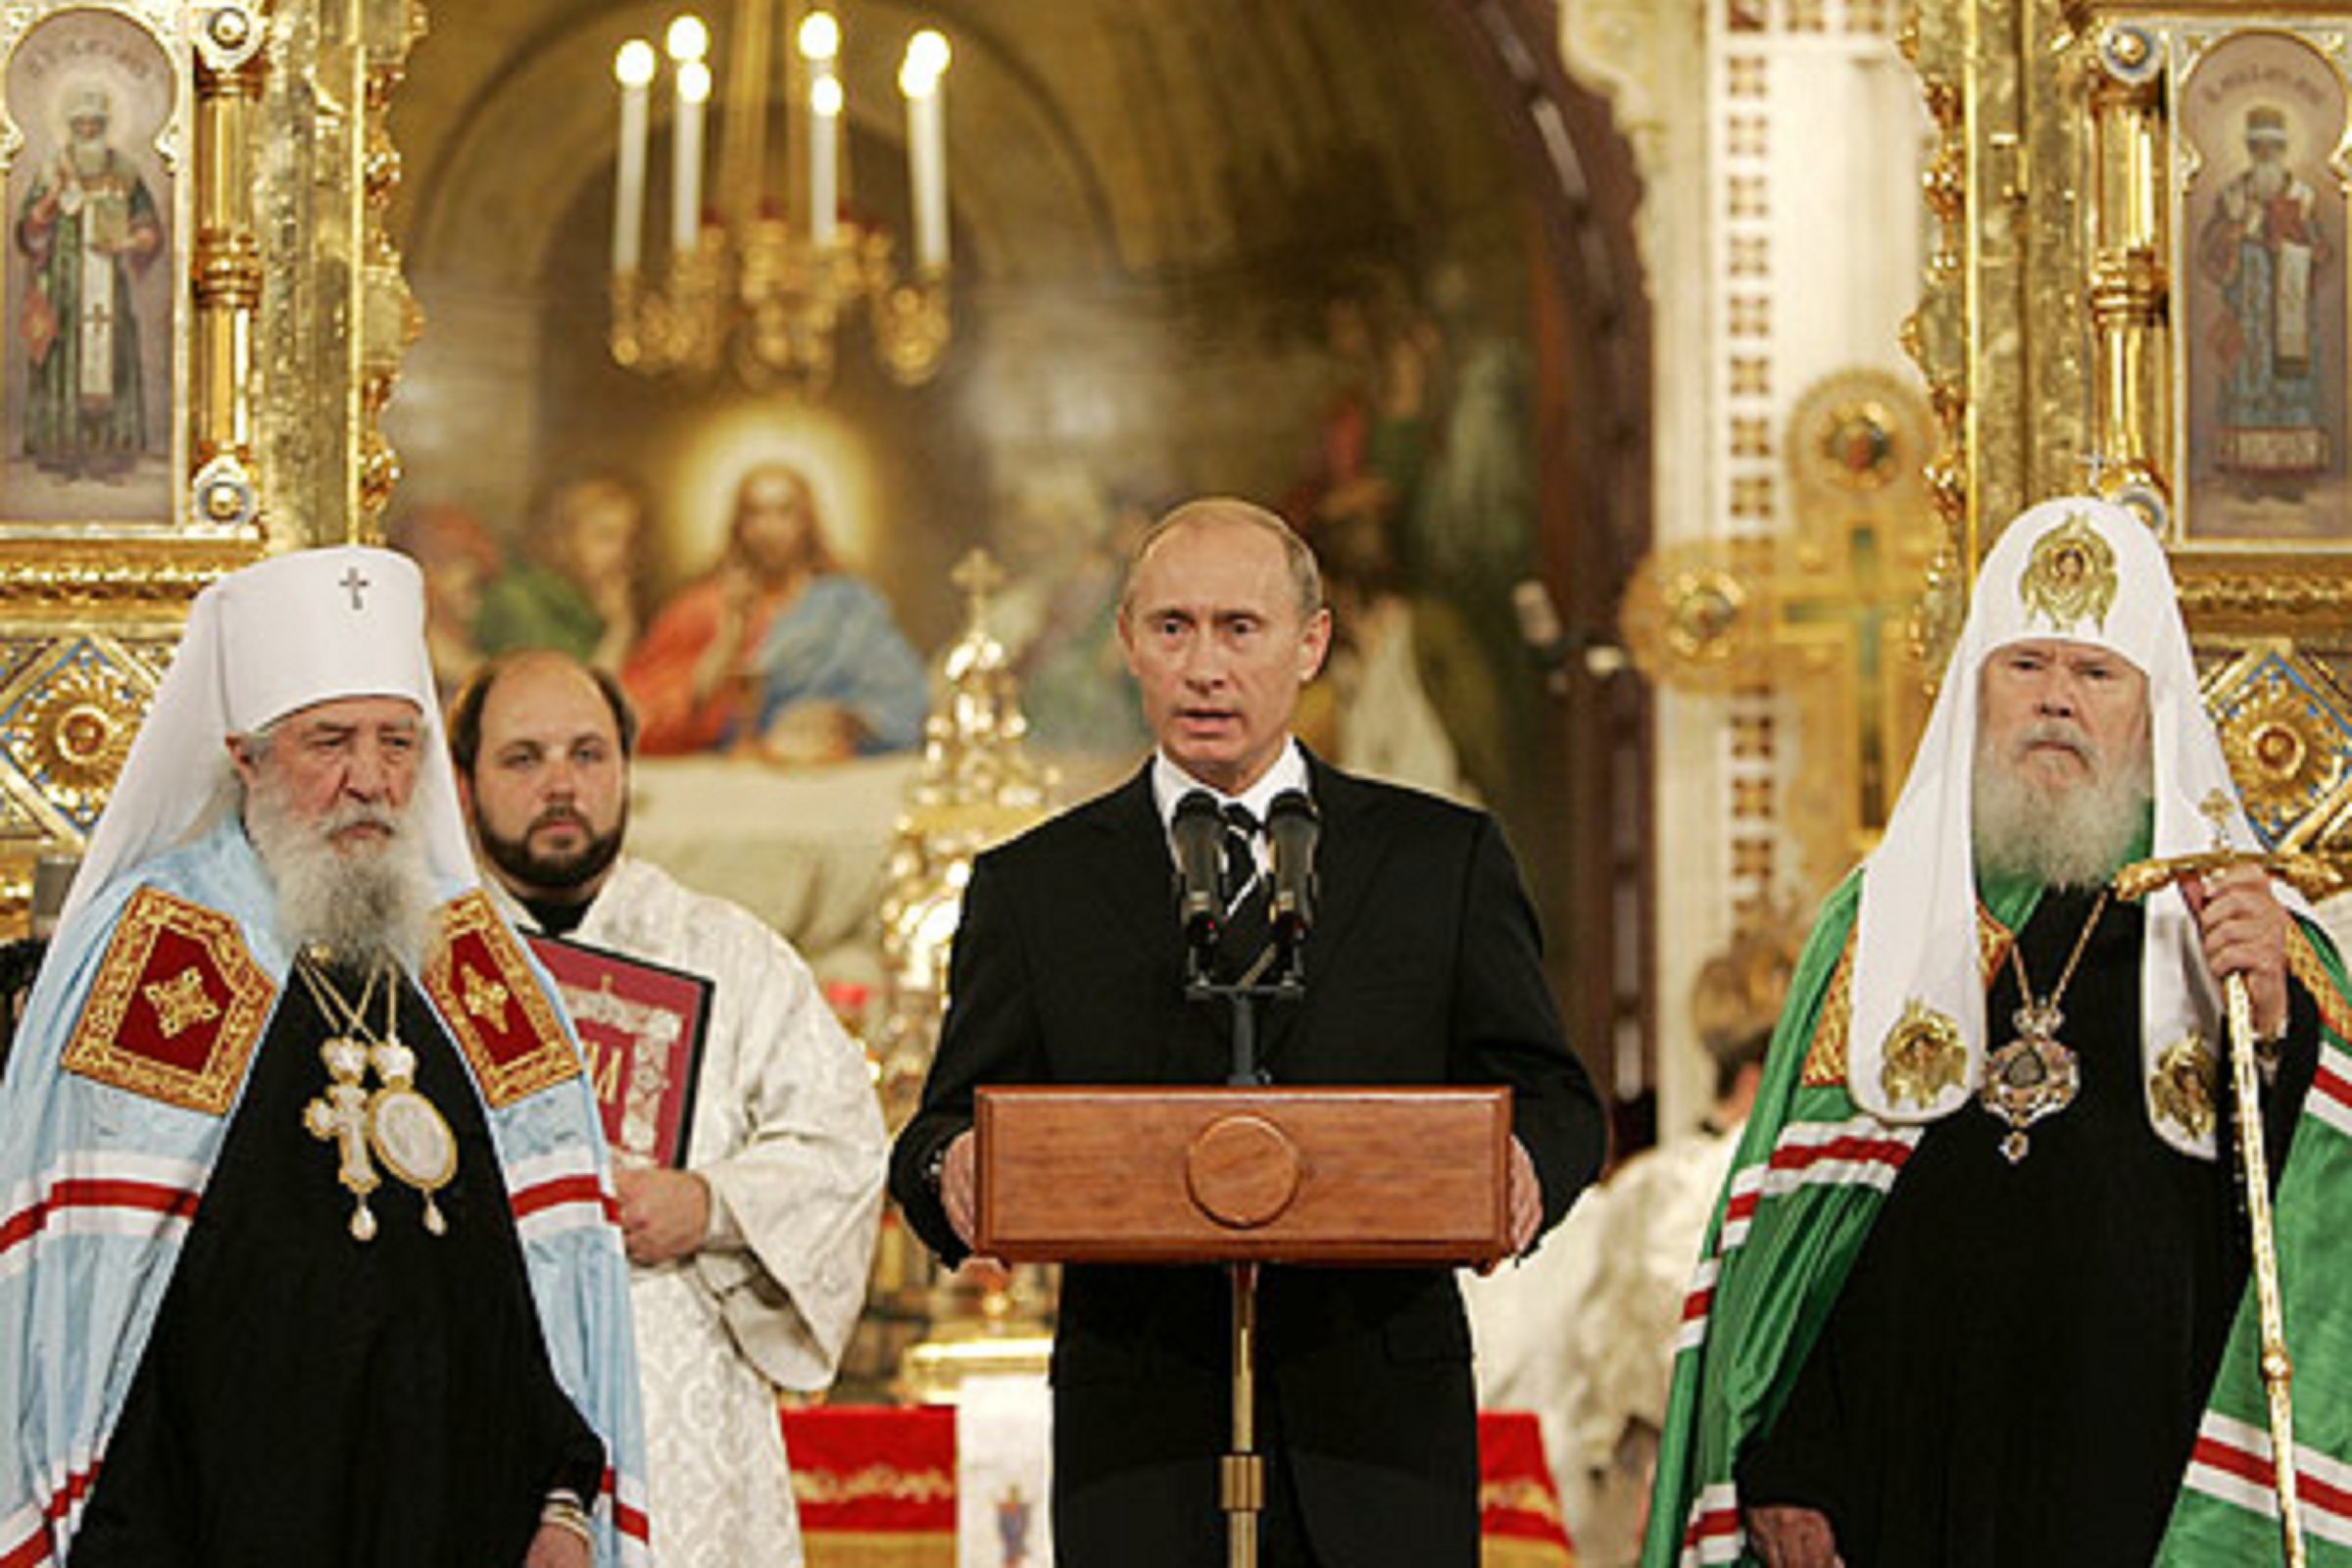 Putin and the Orthodox Church: how his faith shapes his politics